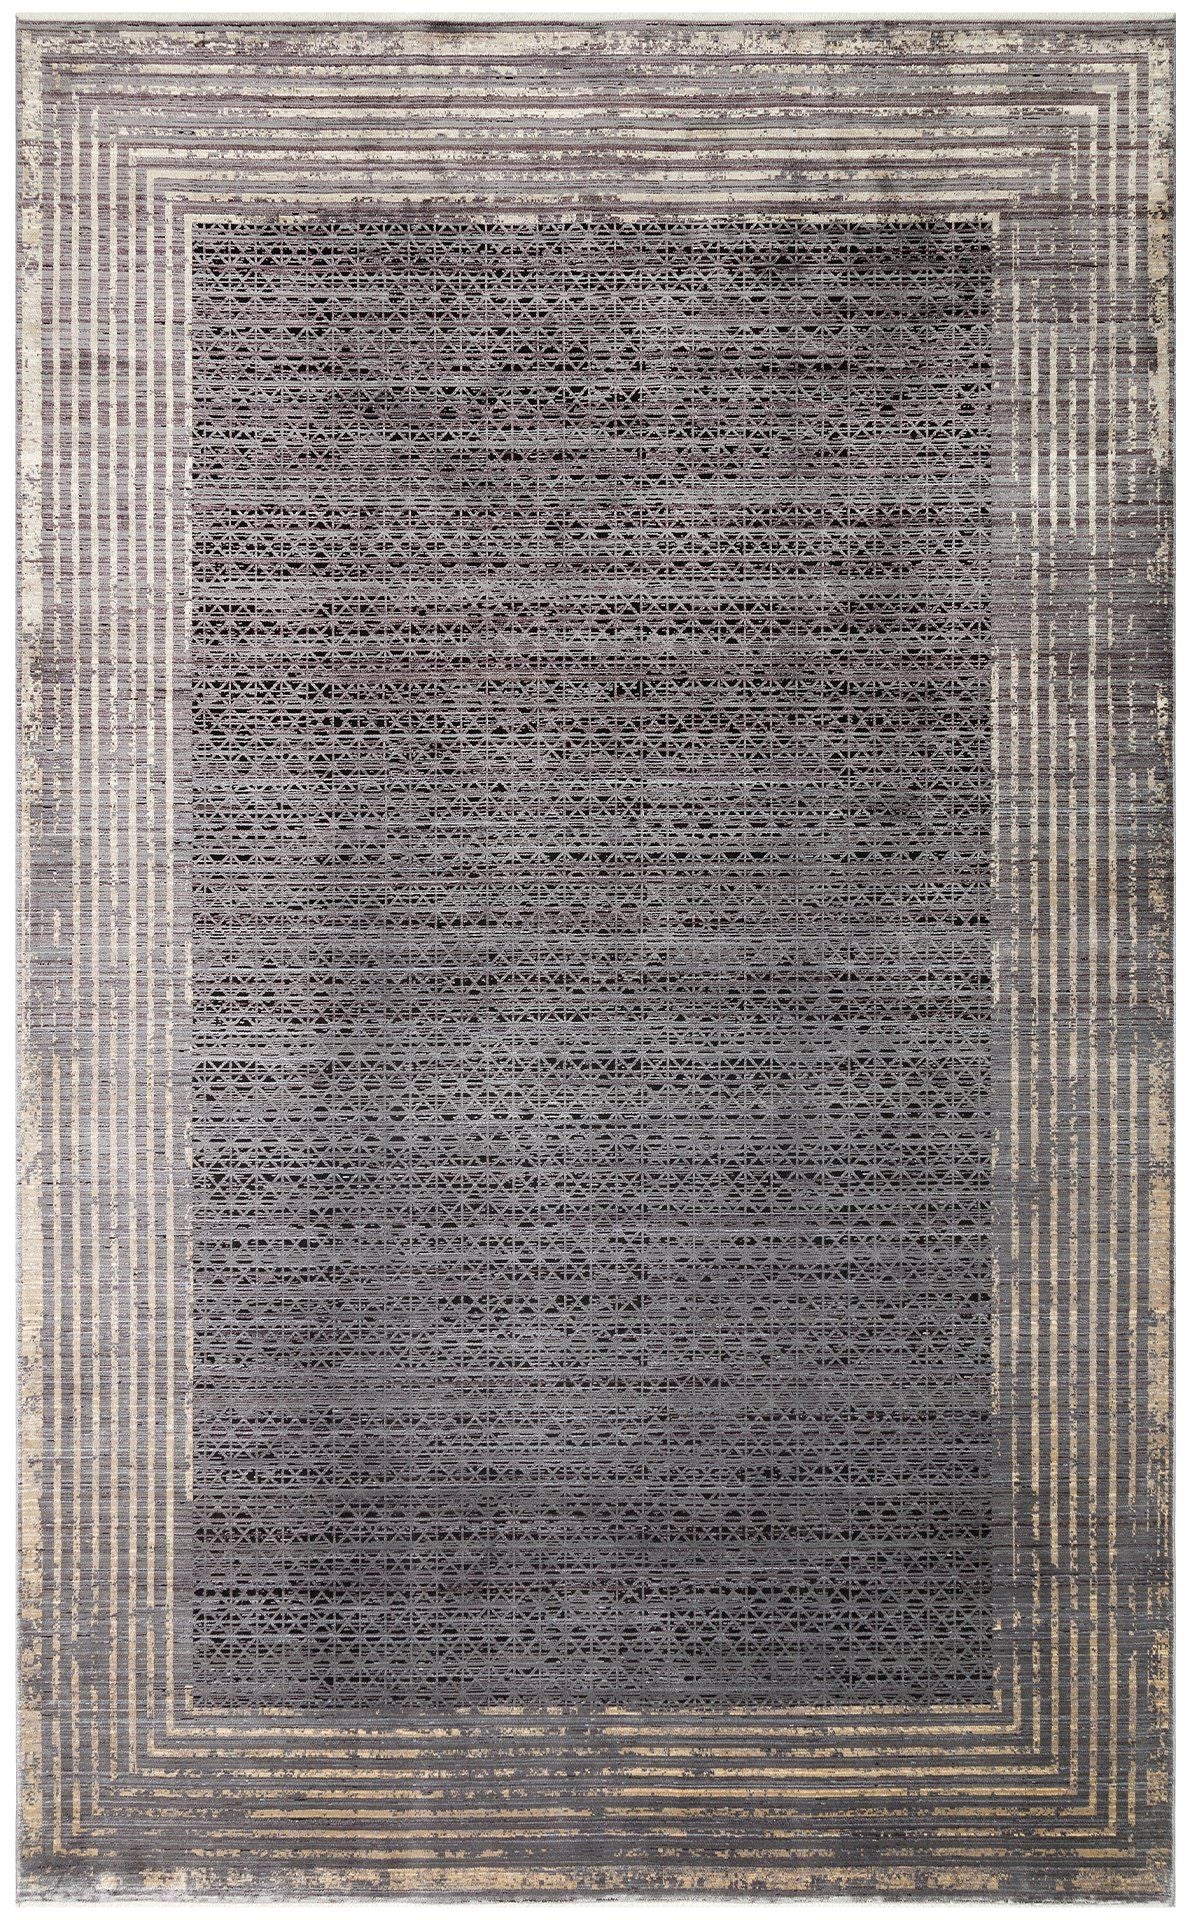 Mhl 01 - antracit, guld - hall tæppe (100 x 300)